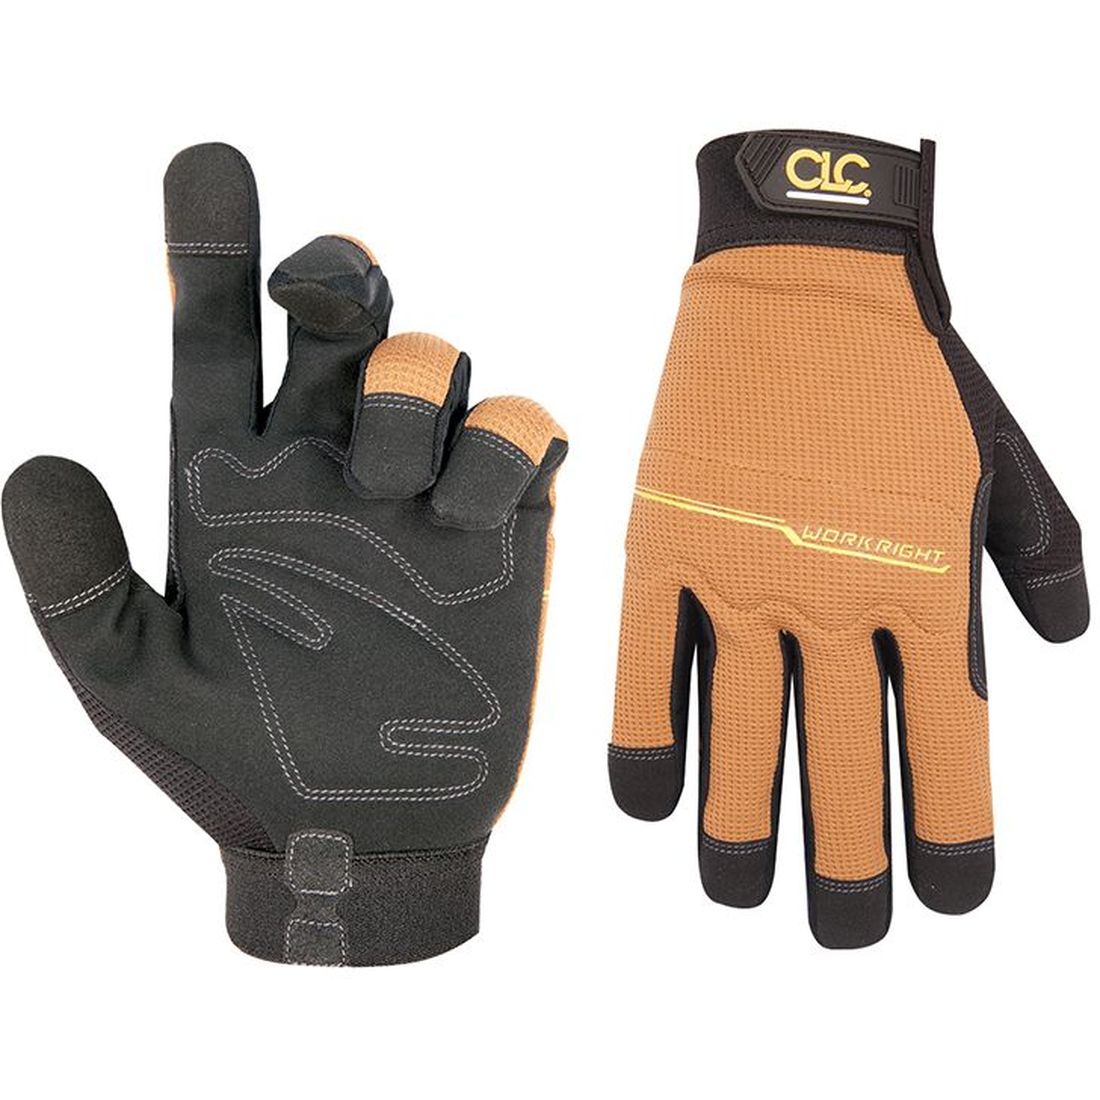 Kuny's Workright Flex Grip Gloves - Medium                                           